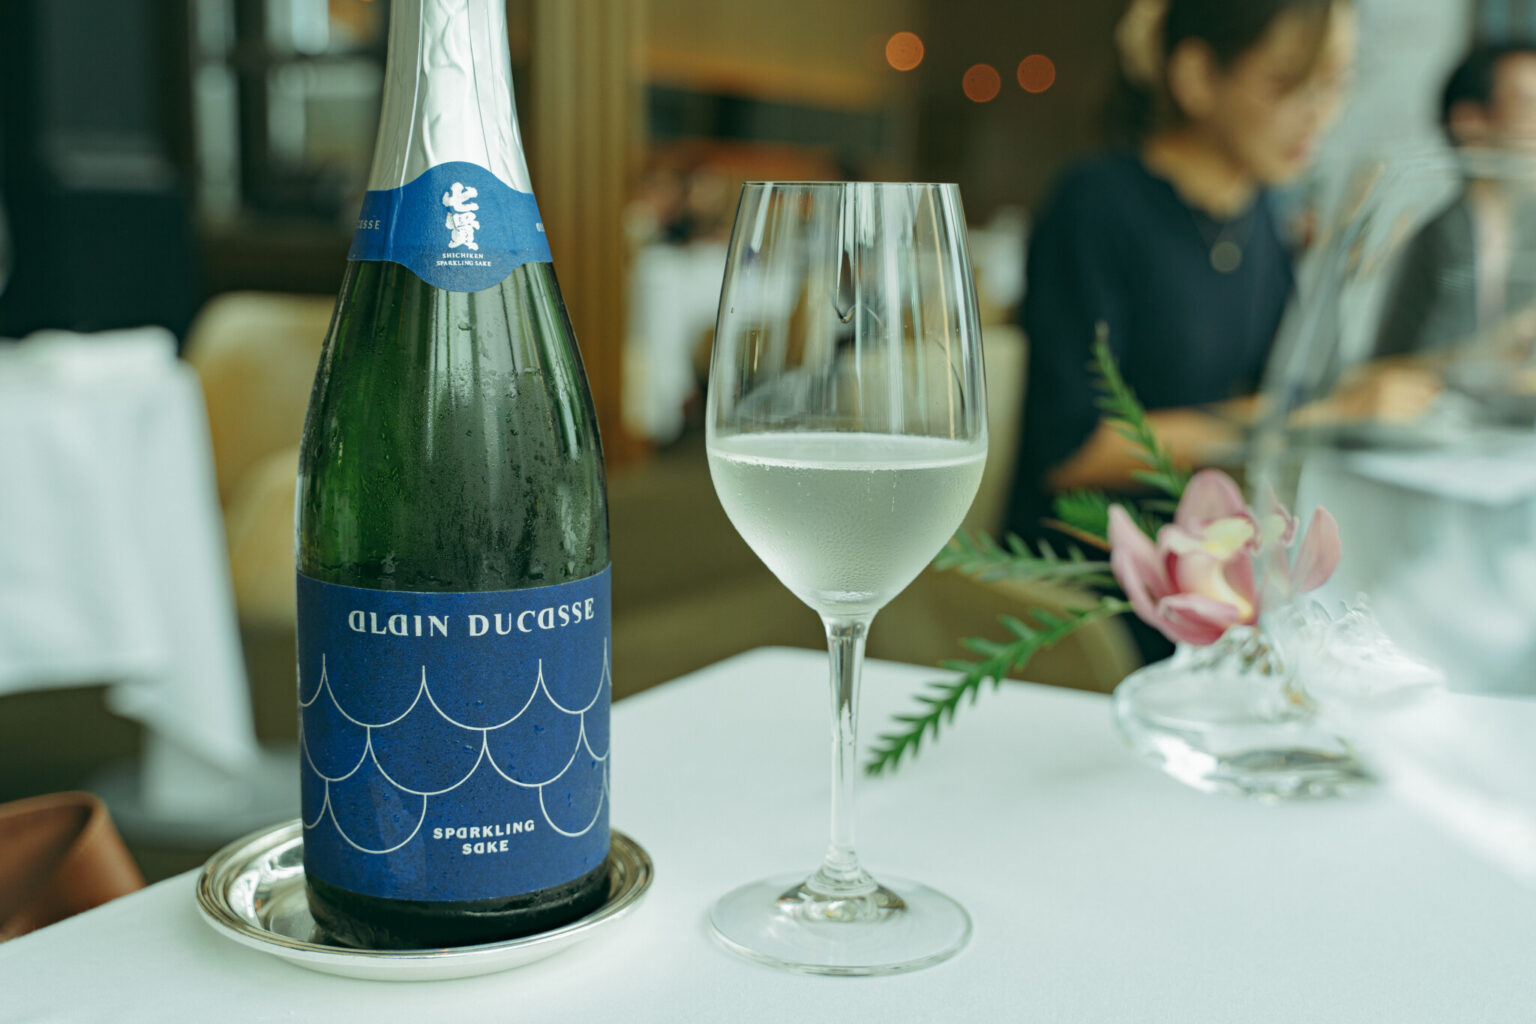 「Alain Ducasse Sparkling Sake」。